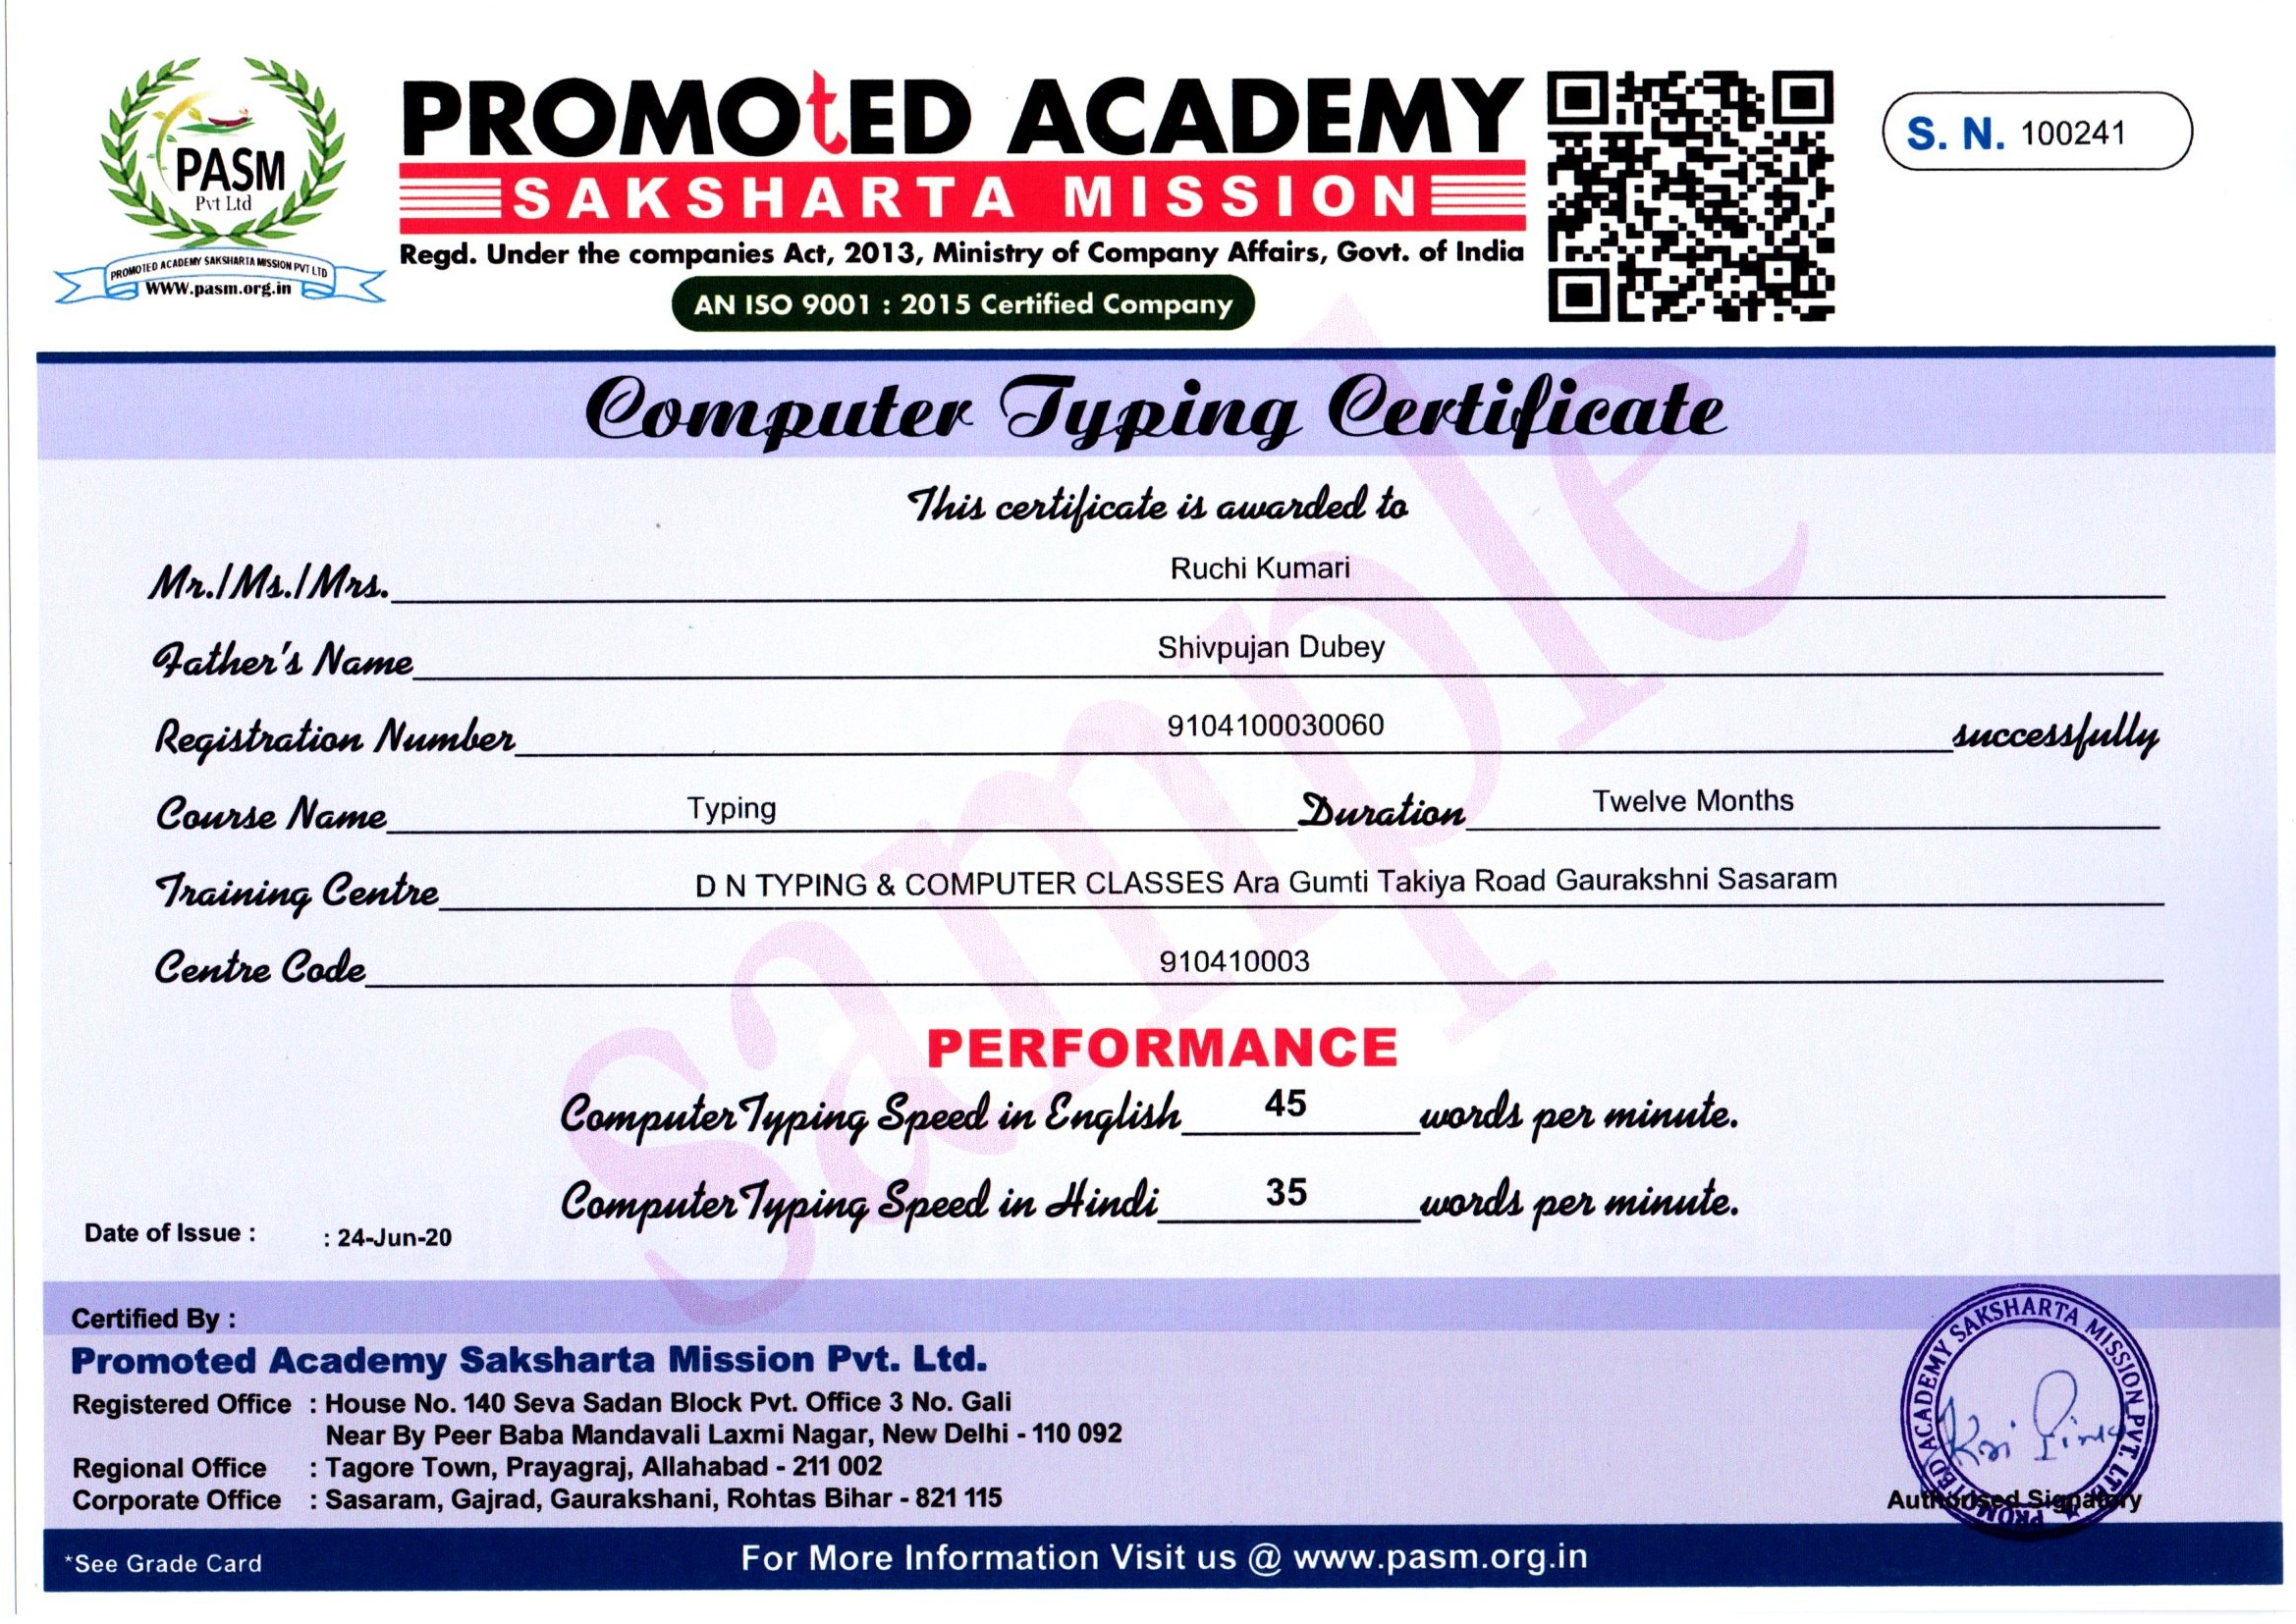 PROMOTED ACADEMY SAKSHARTA MISSION PVT LTD PMSA Certificate Sample